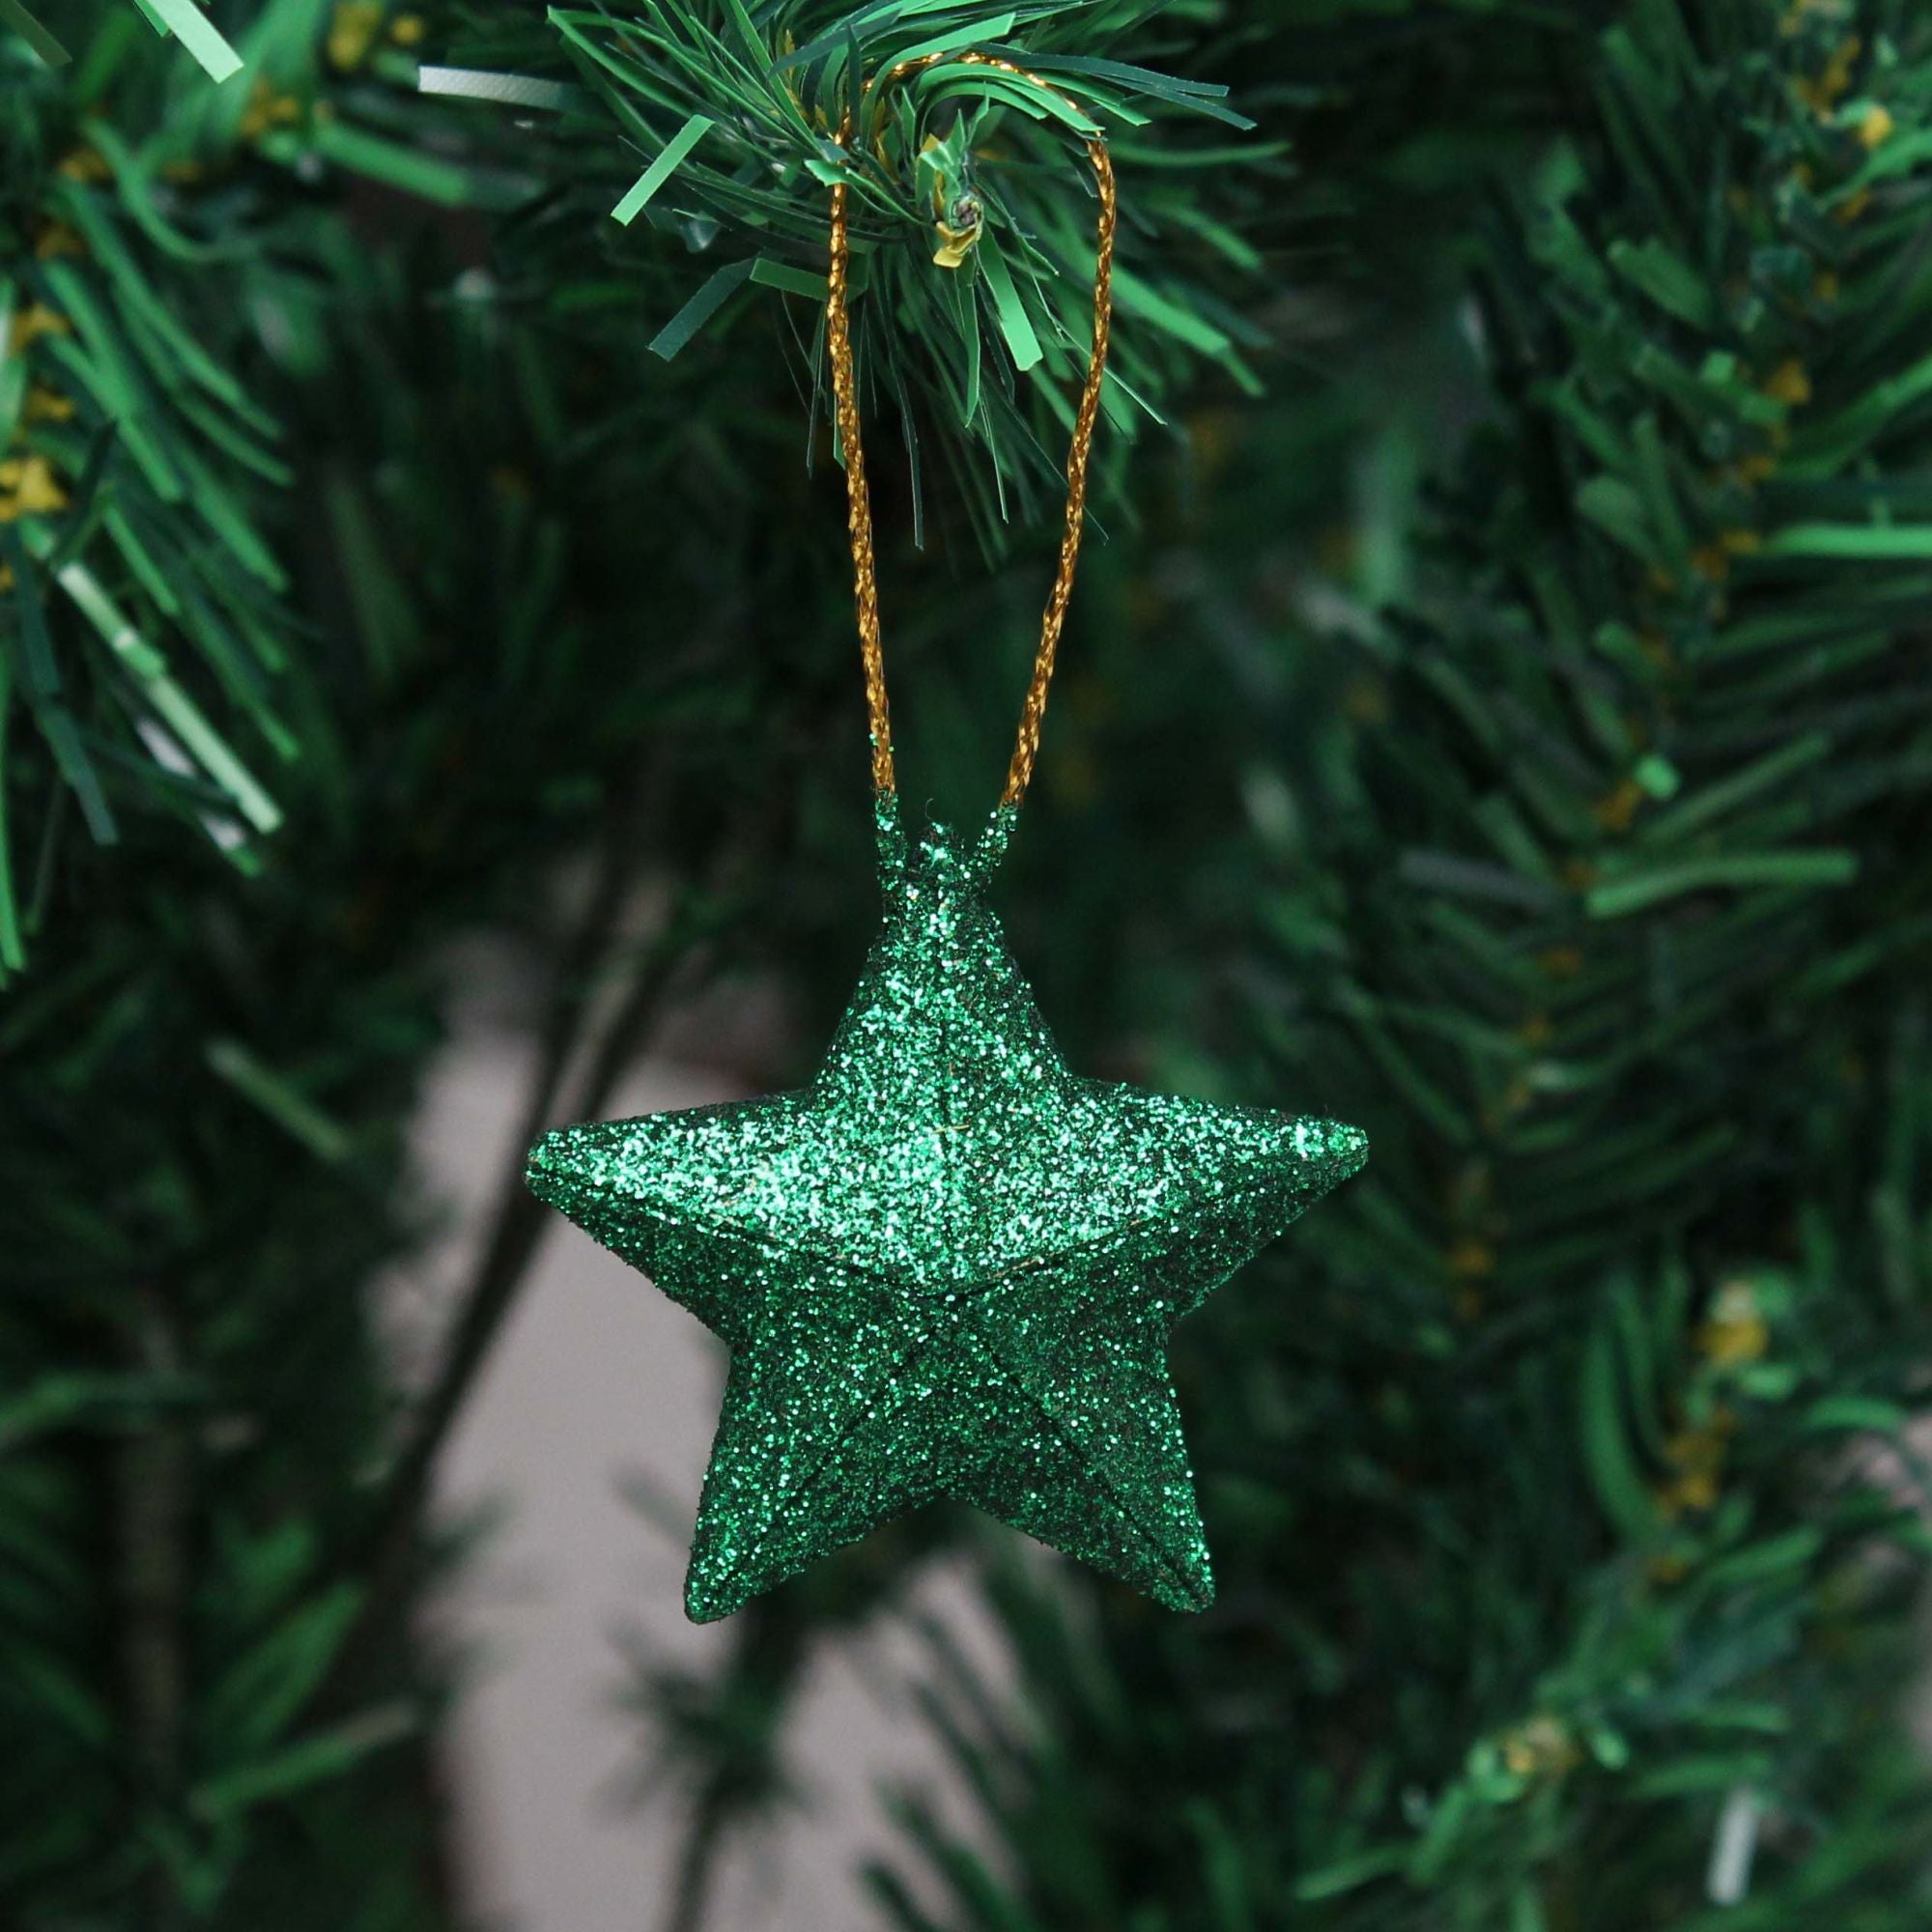 Handmade Christmas Ornaments - 3D Glitter Stars, 2inch, Green, 8pc